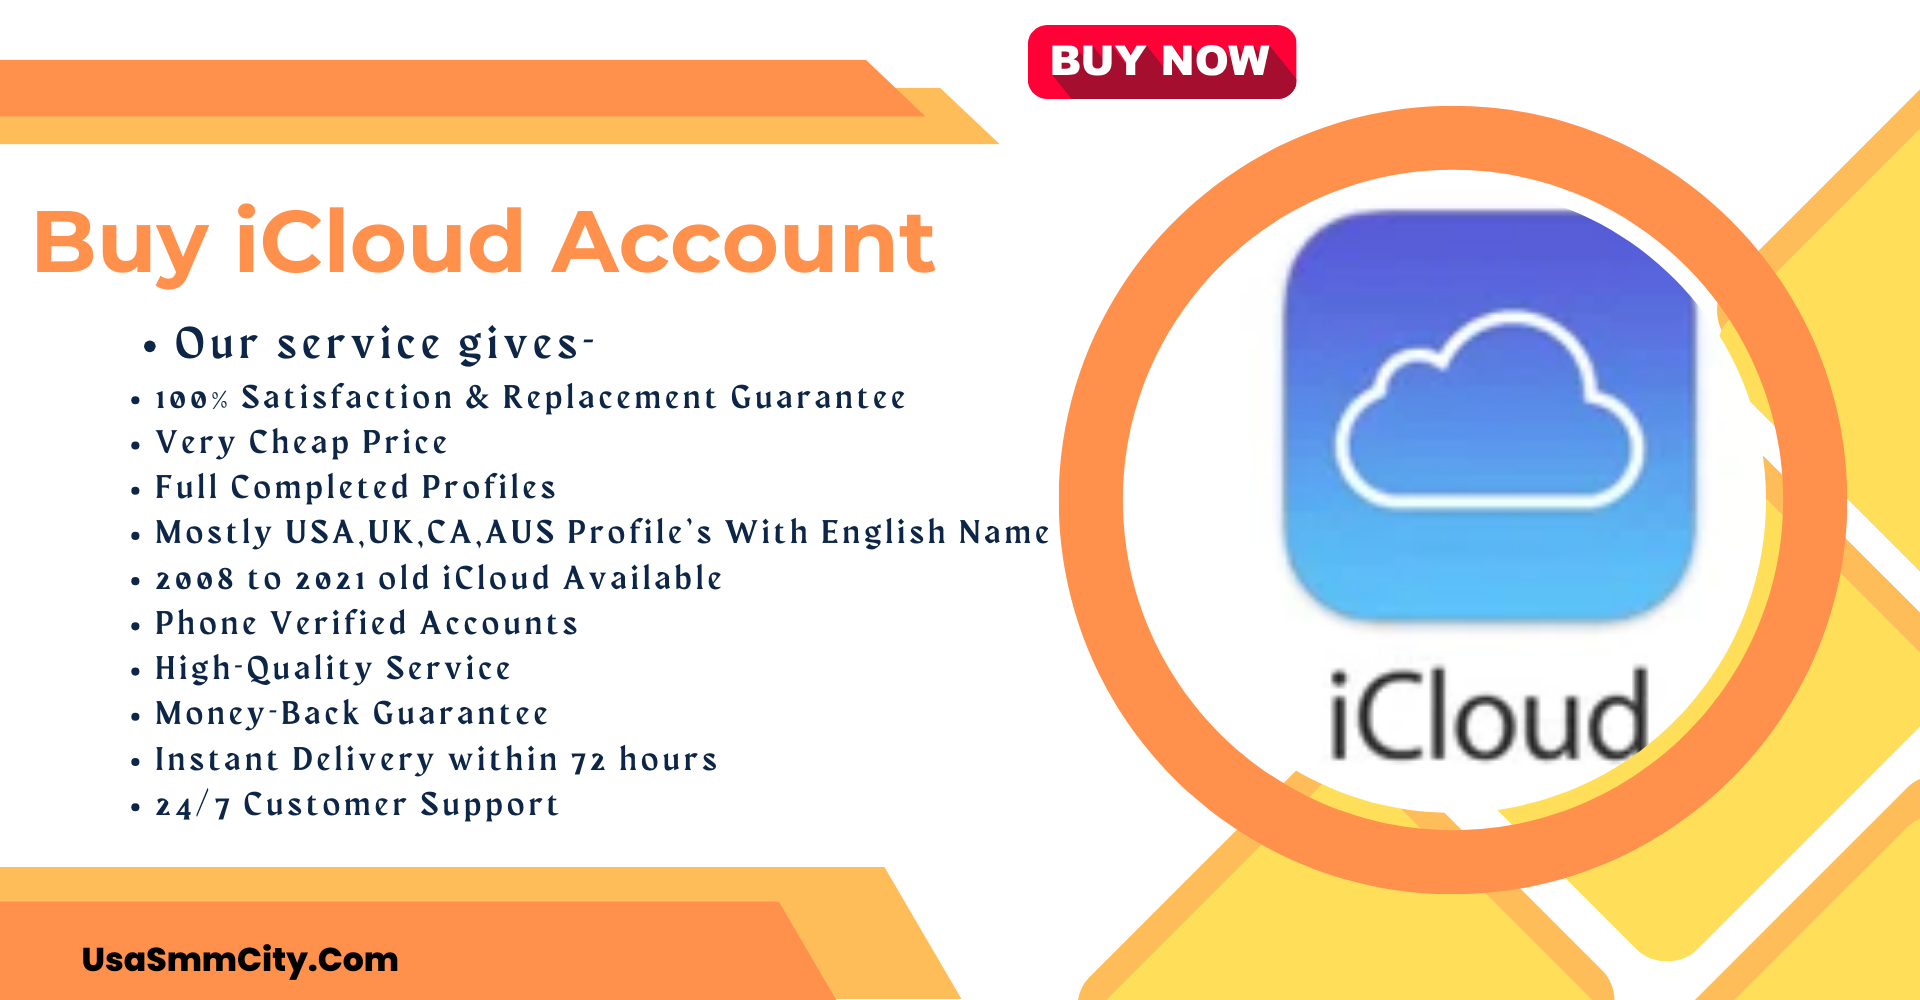 Buy iCloud Account
